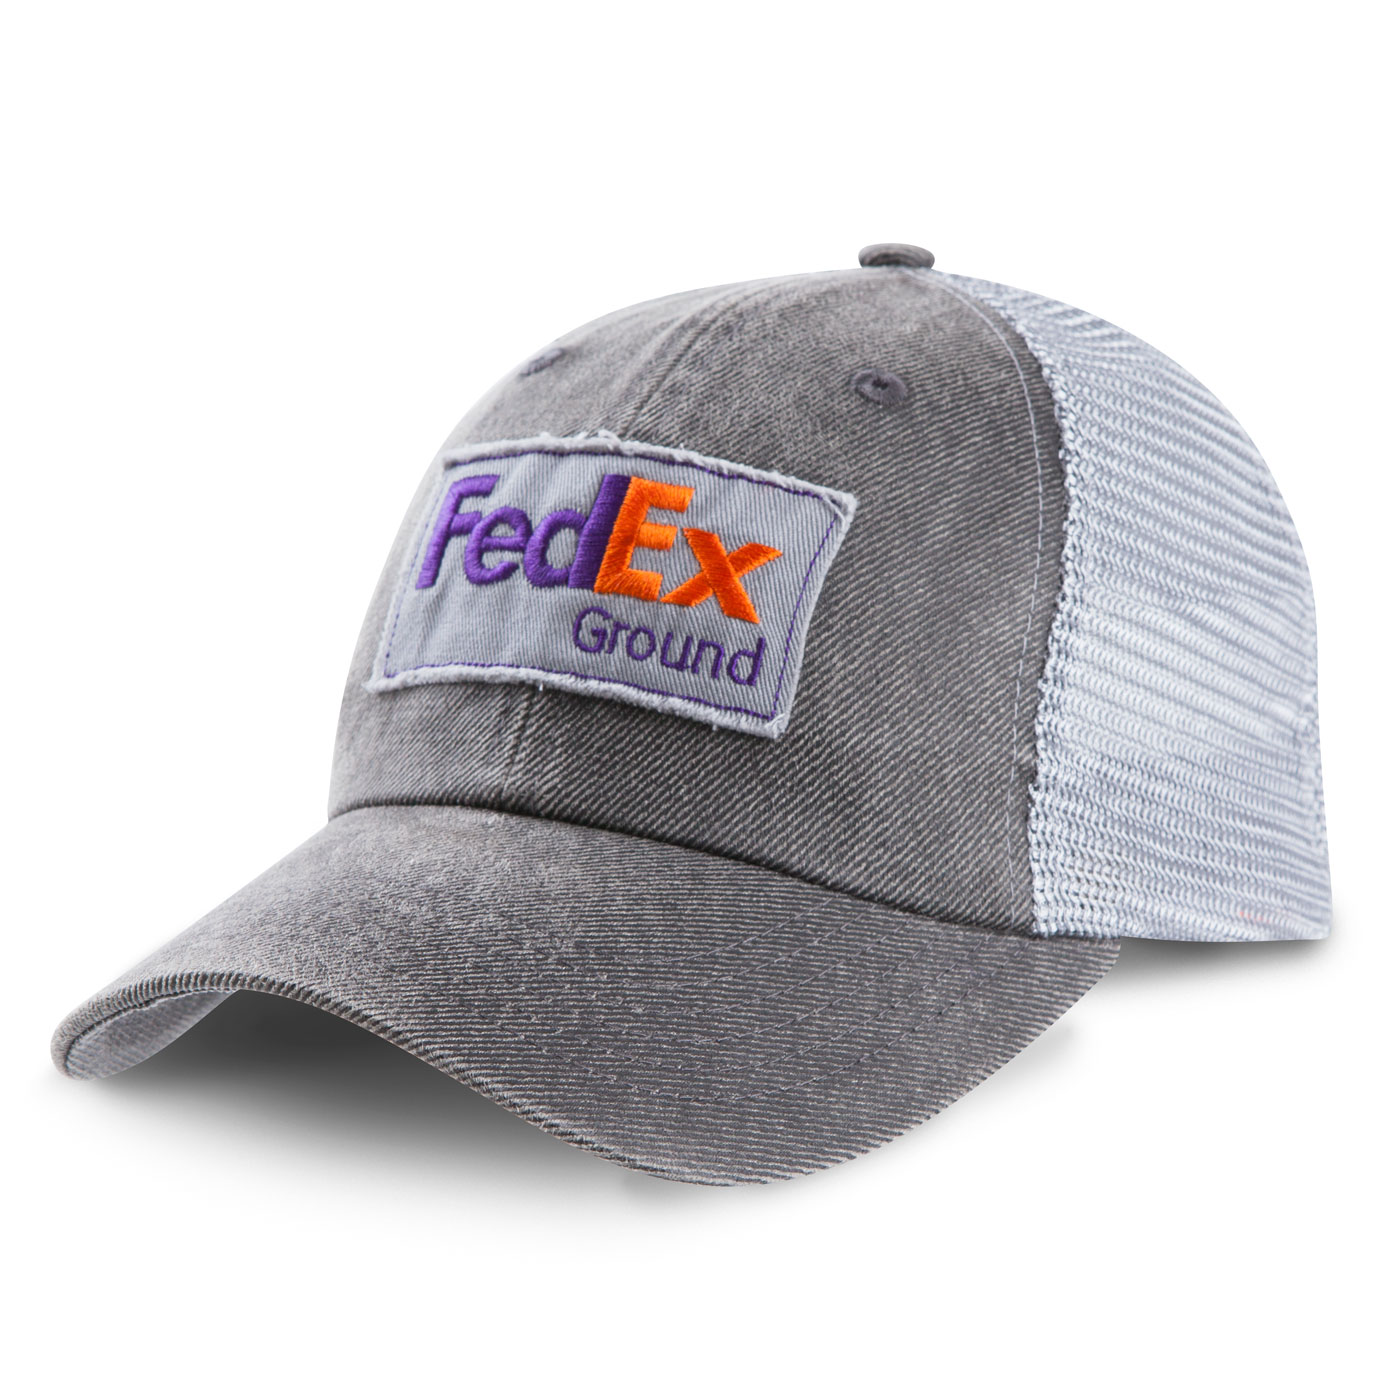 FedEx Ground Waxy Cotton Mesh Cap | The FedEx Company Store